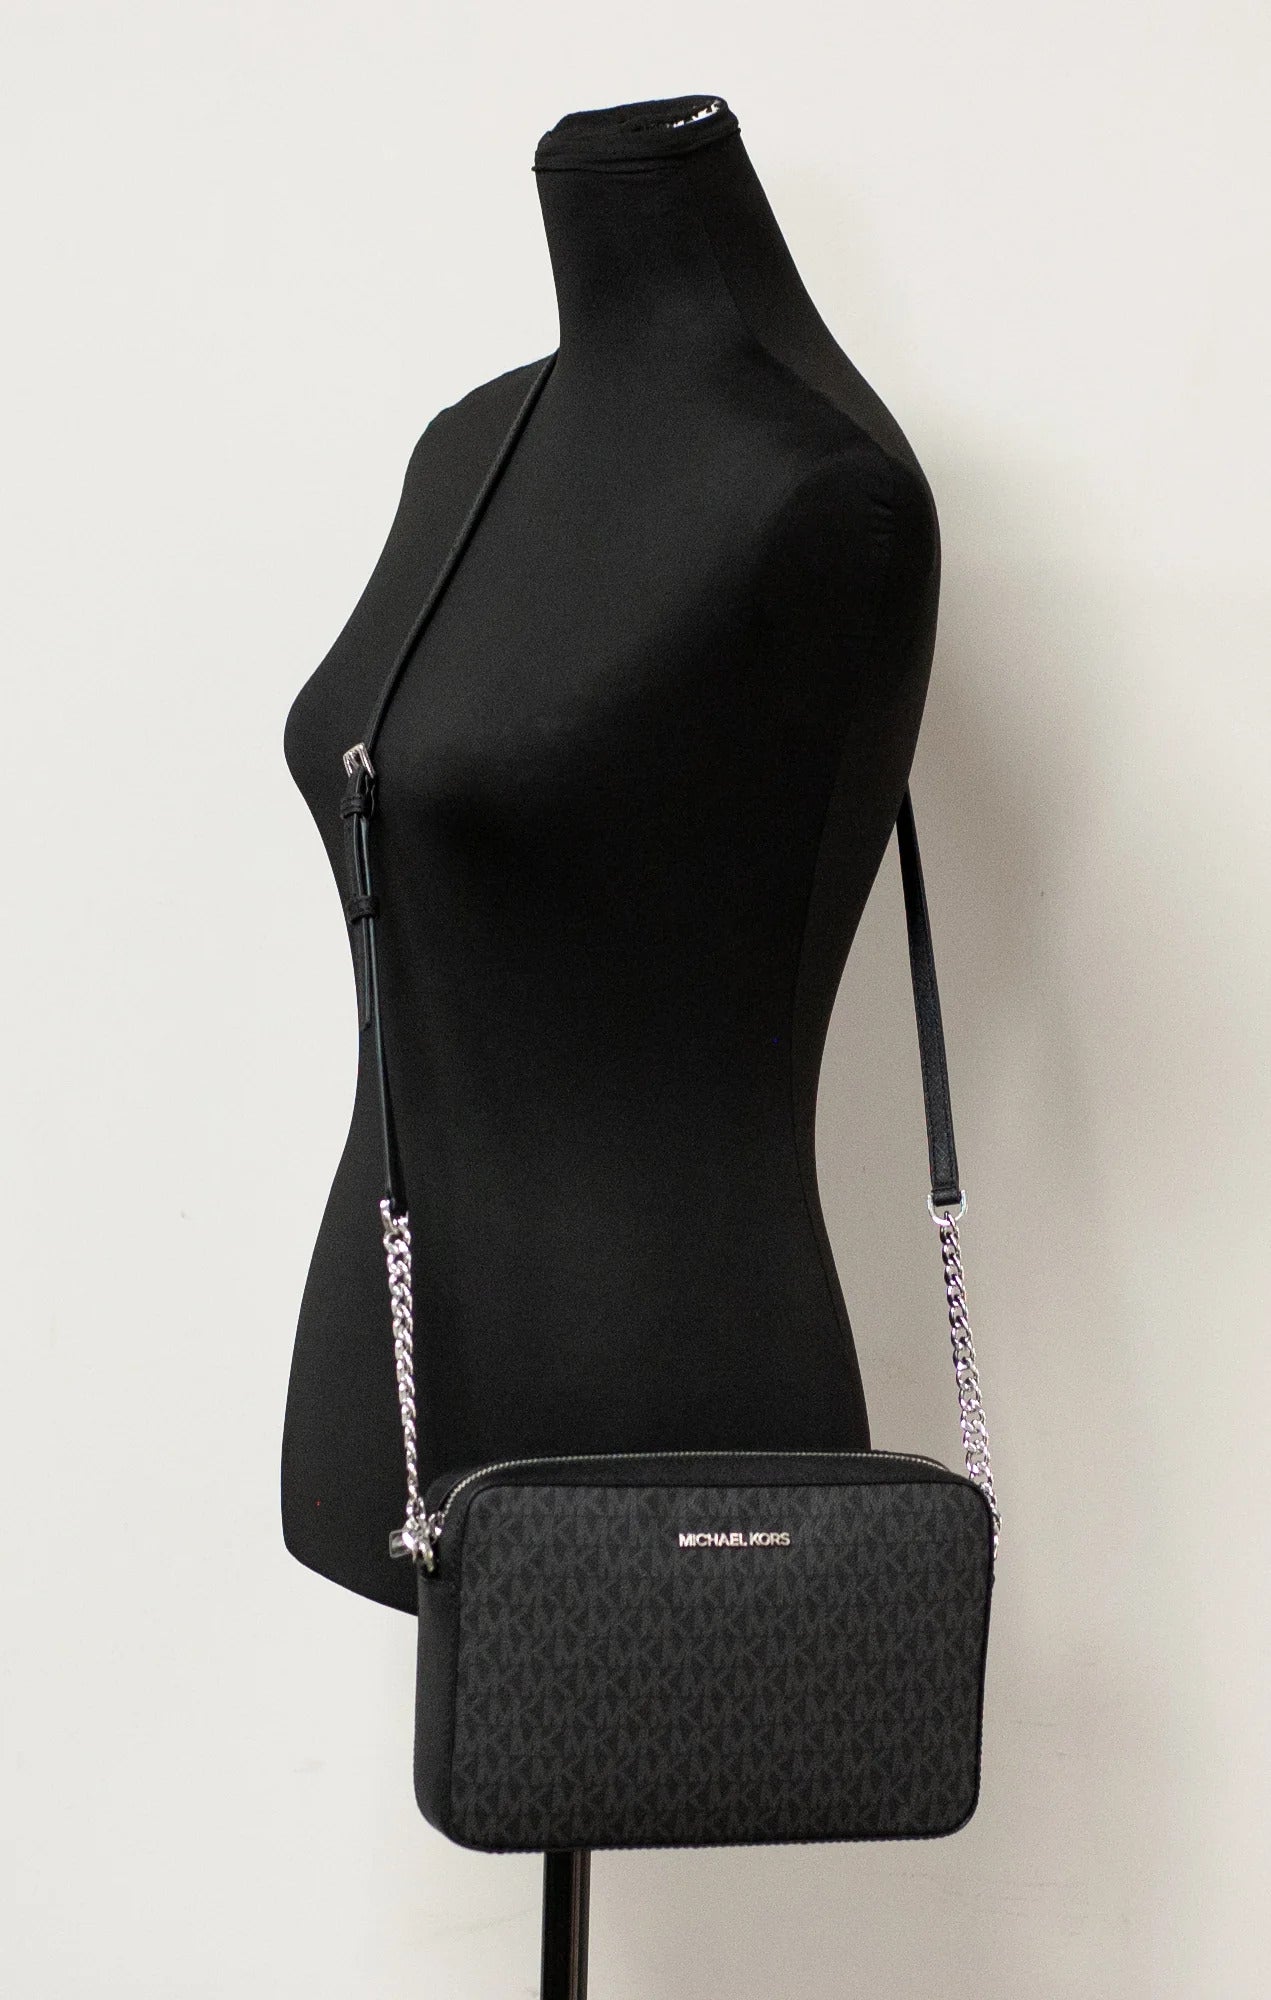 Michael Kors Saffiano Leather Shoulder Bag - Size M - Jet Set